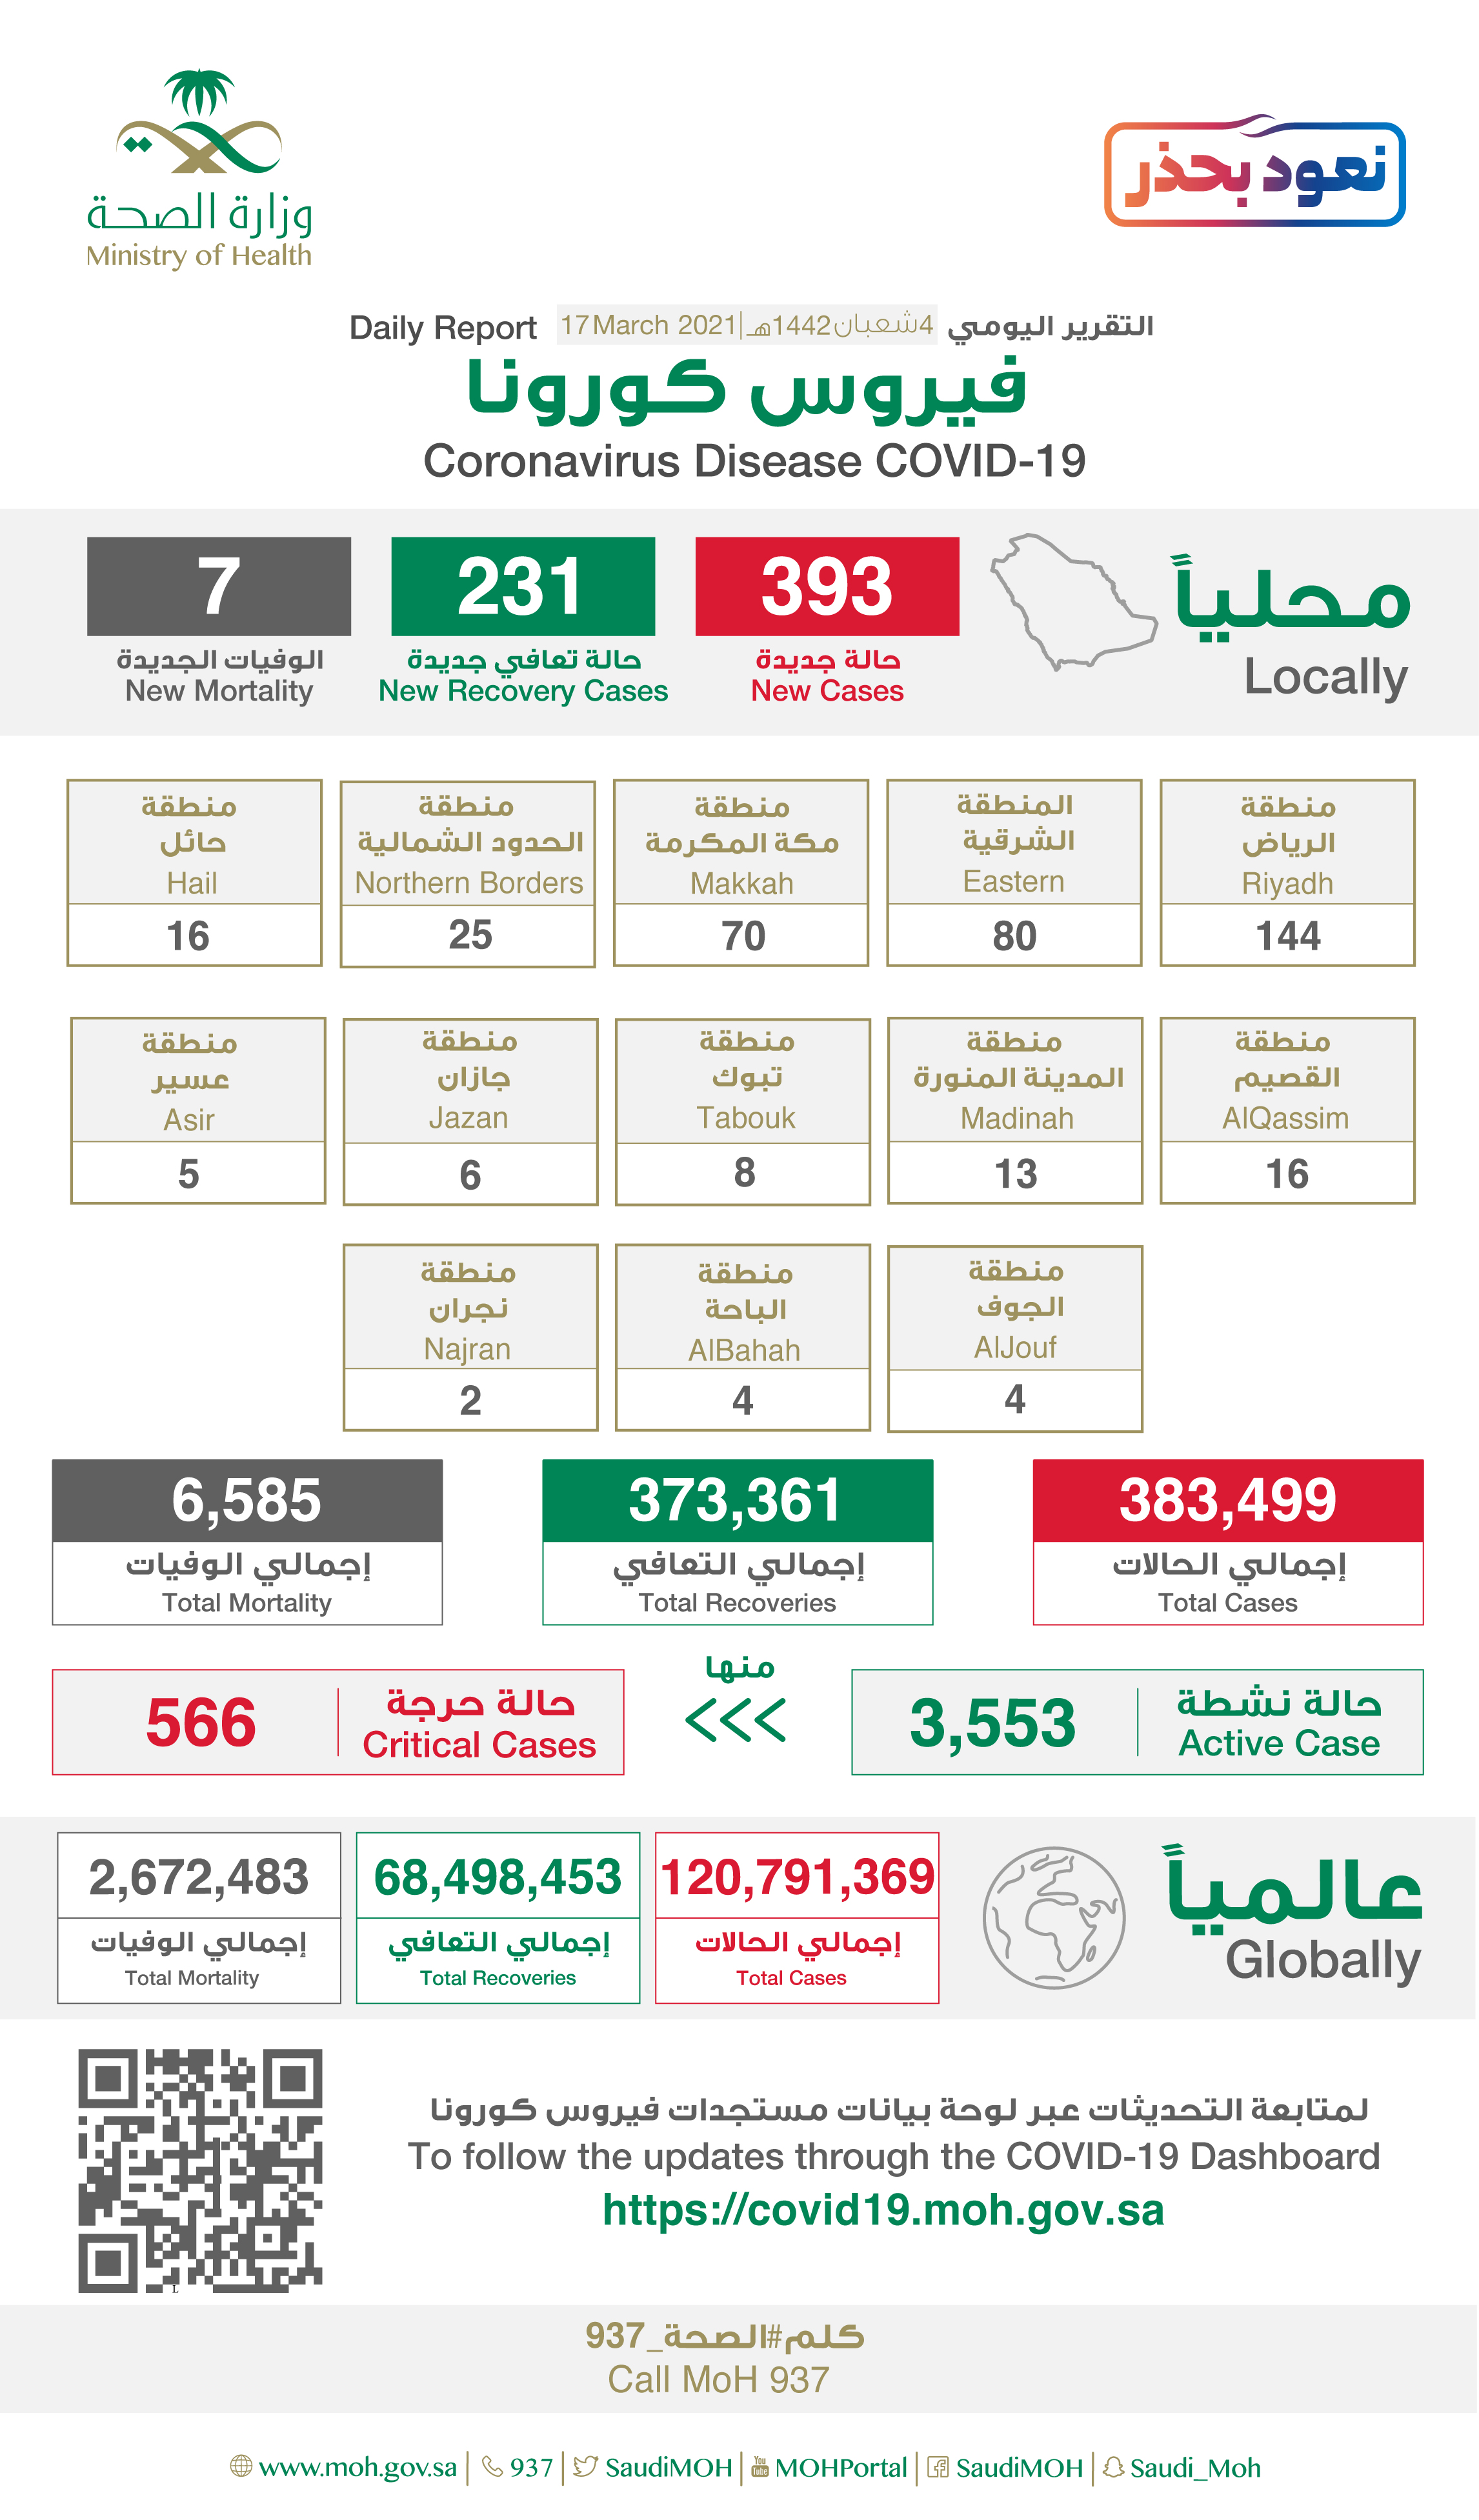 Saudi Arabia Coronavirus : Total Cases :383,499 , New Cases : 393, Cured : 373,361 , Deaths: 6,585, Active Cases : 3,553